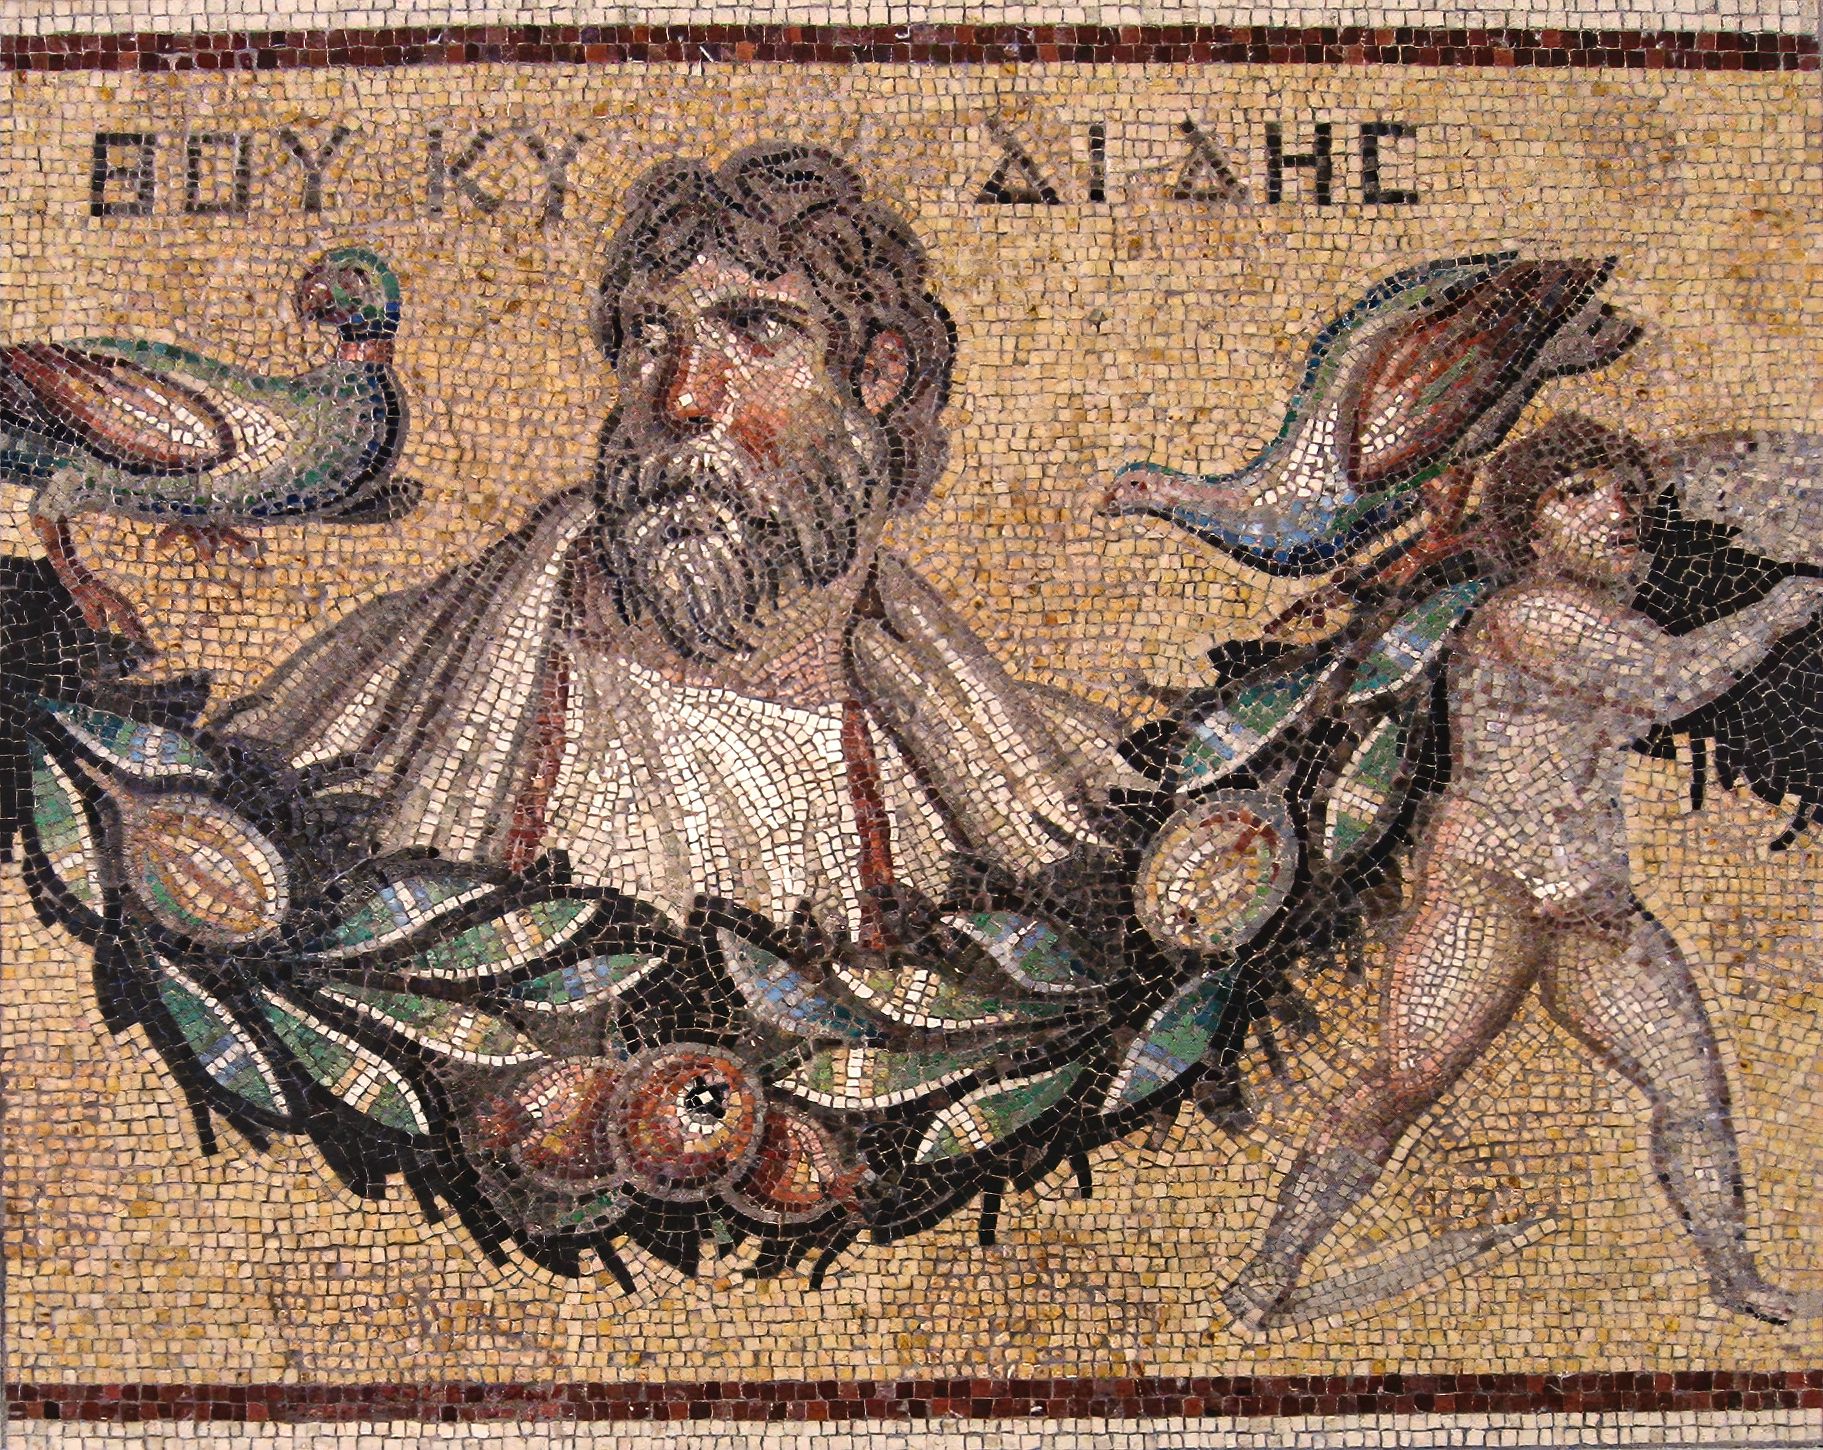 Thucydides Mosaic from Jerash Jordan Roman 3rd century CE at the Pergamon Museum in Berlin